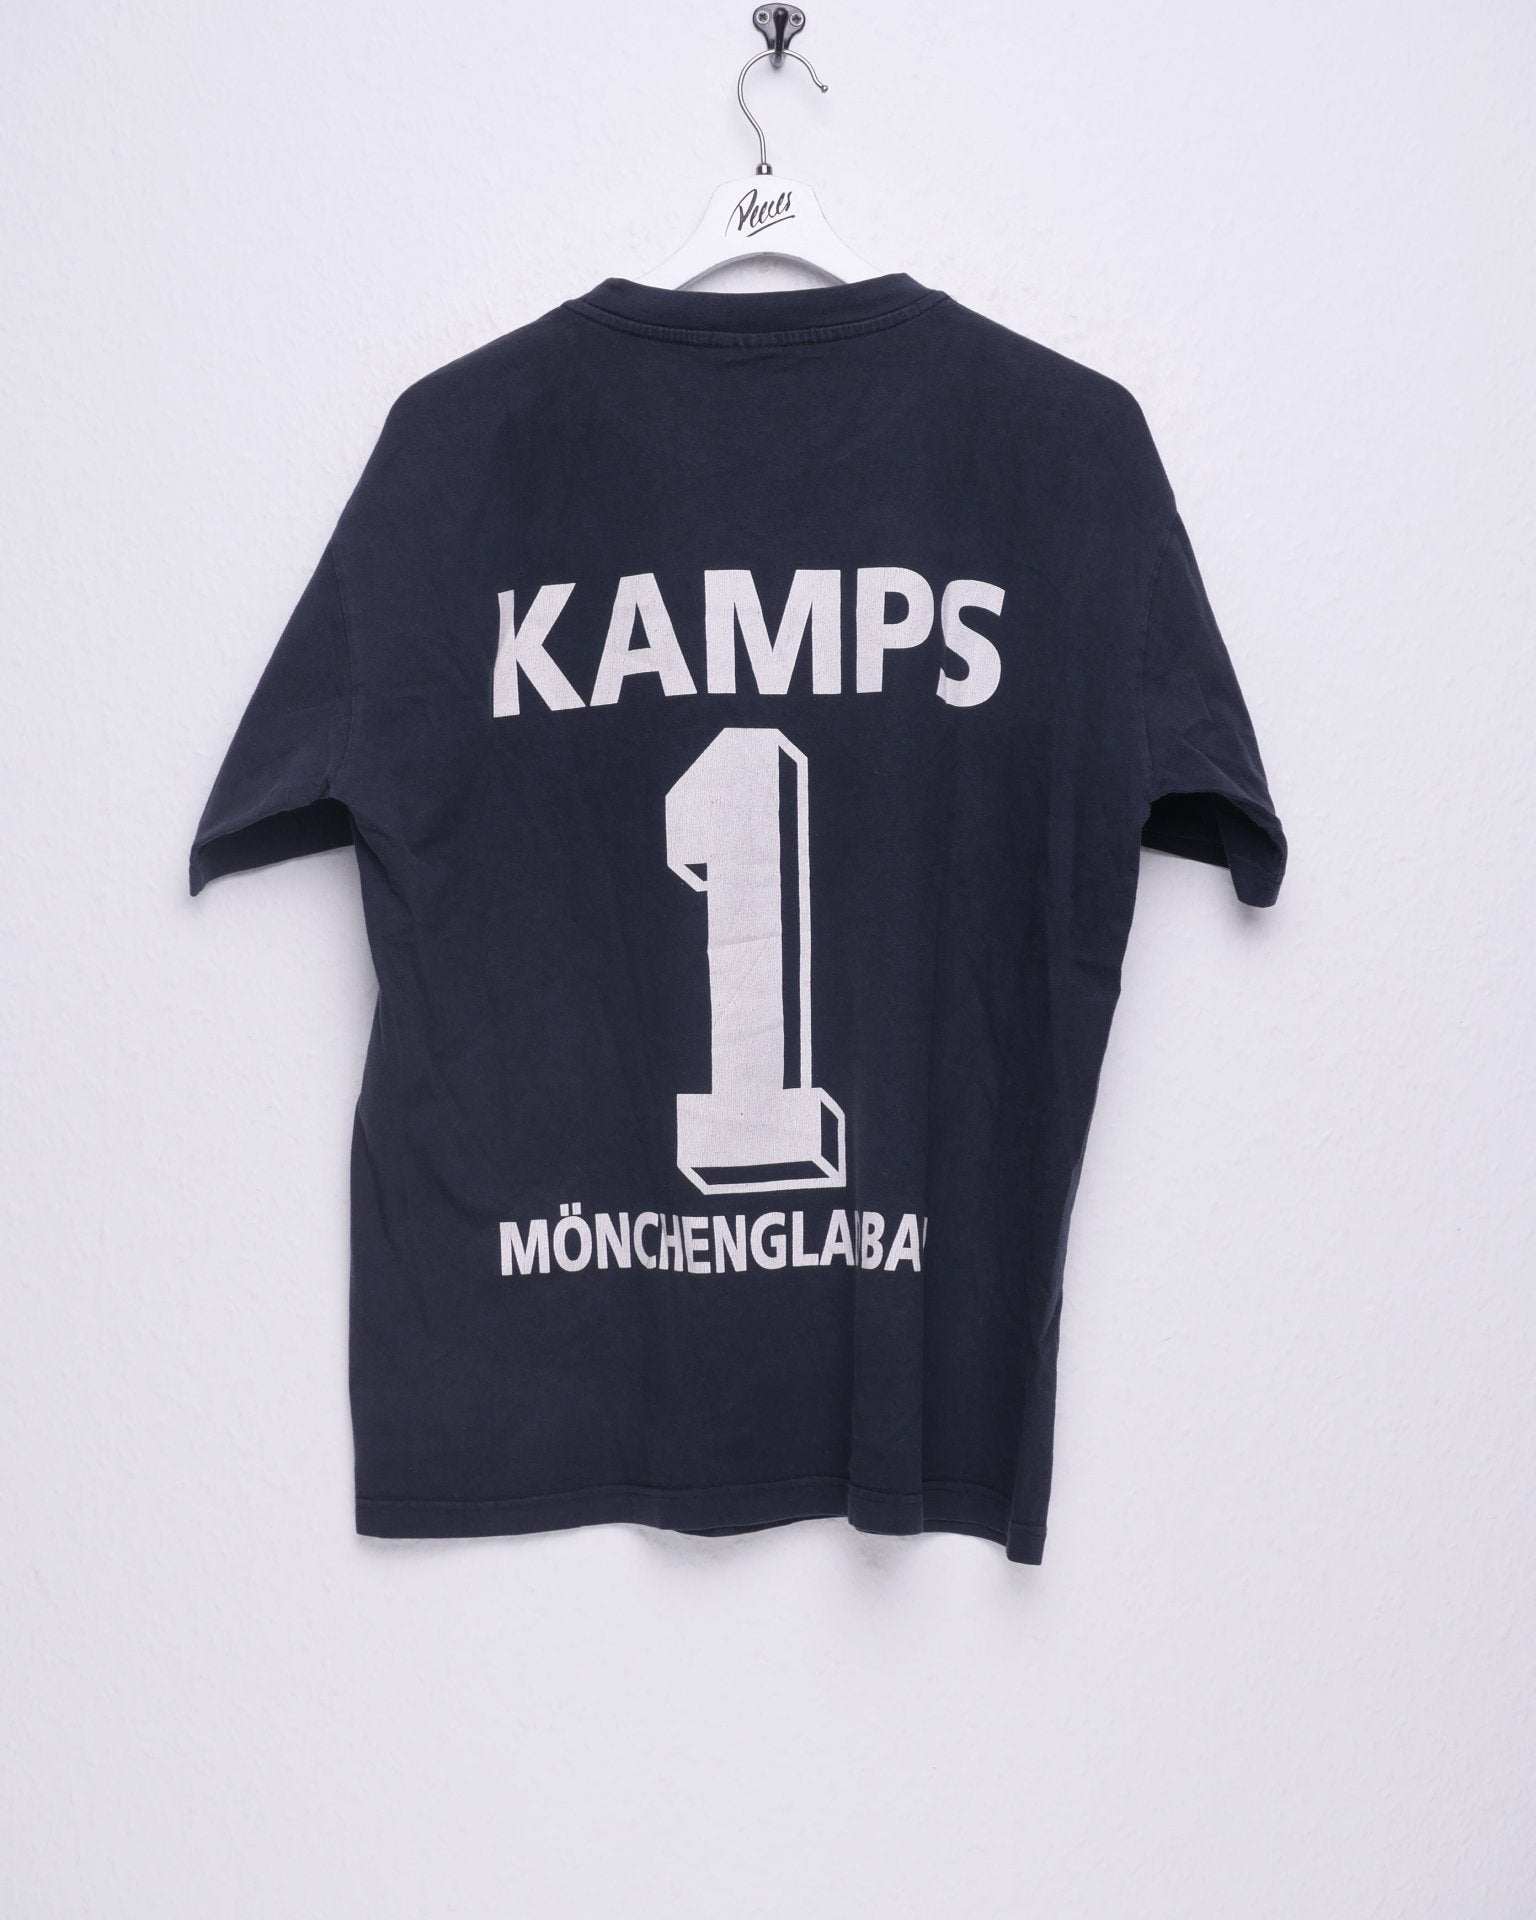 Mönchengladbach printed Kamps Spellout Vintage Shirt - Peeces